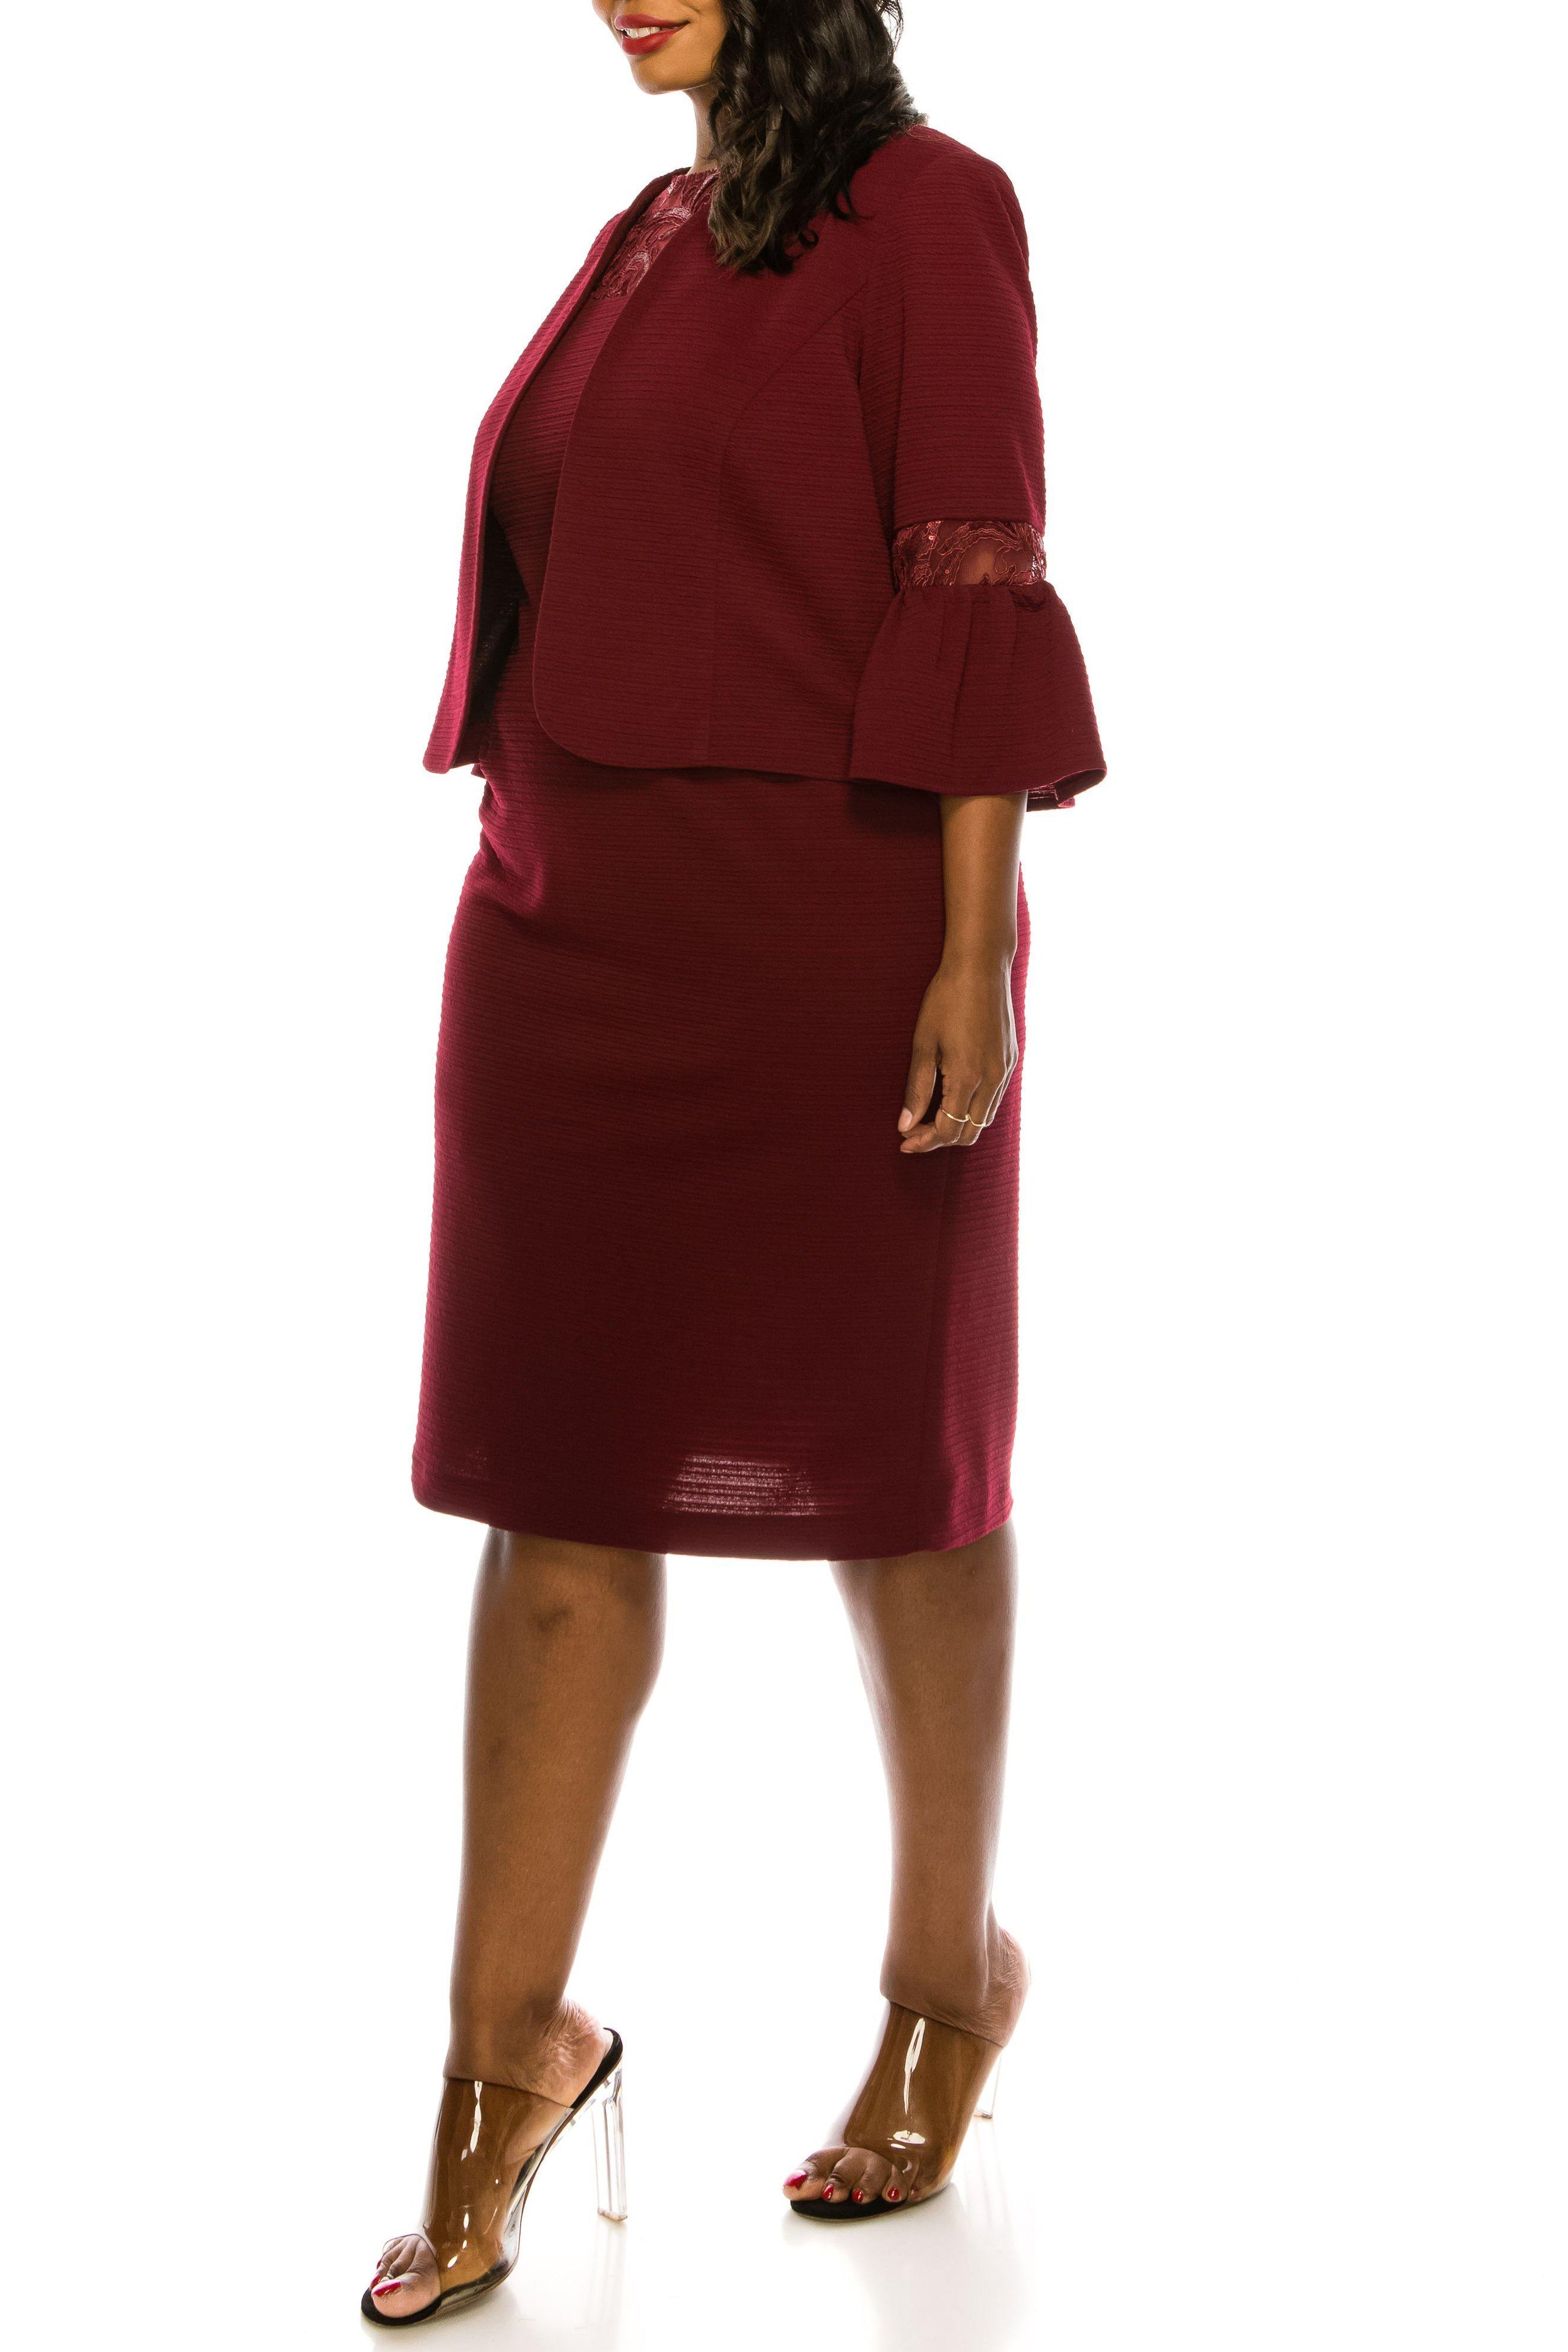 Maya Brooke Plus Size Short Jacket Dress 27927 - The Dress Outlet